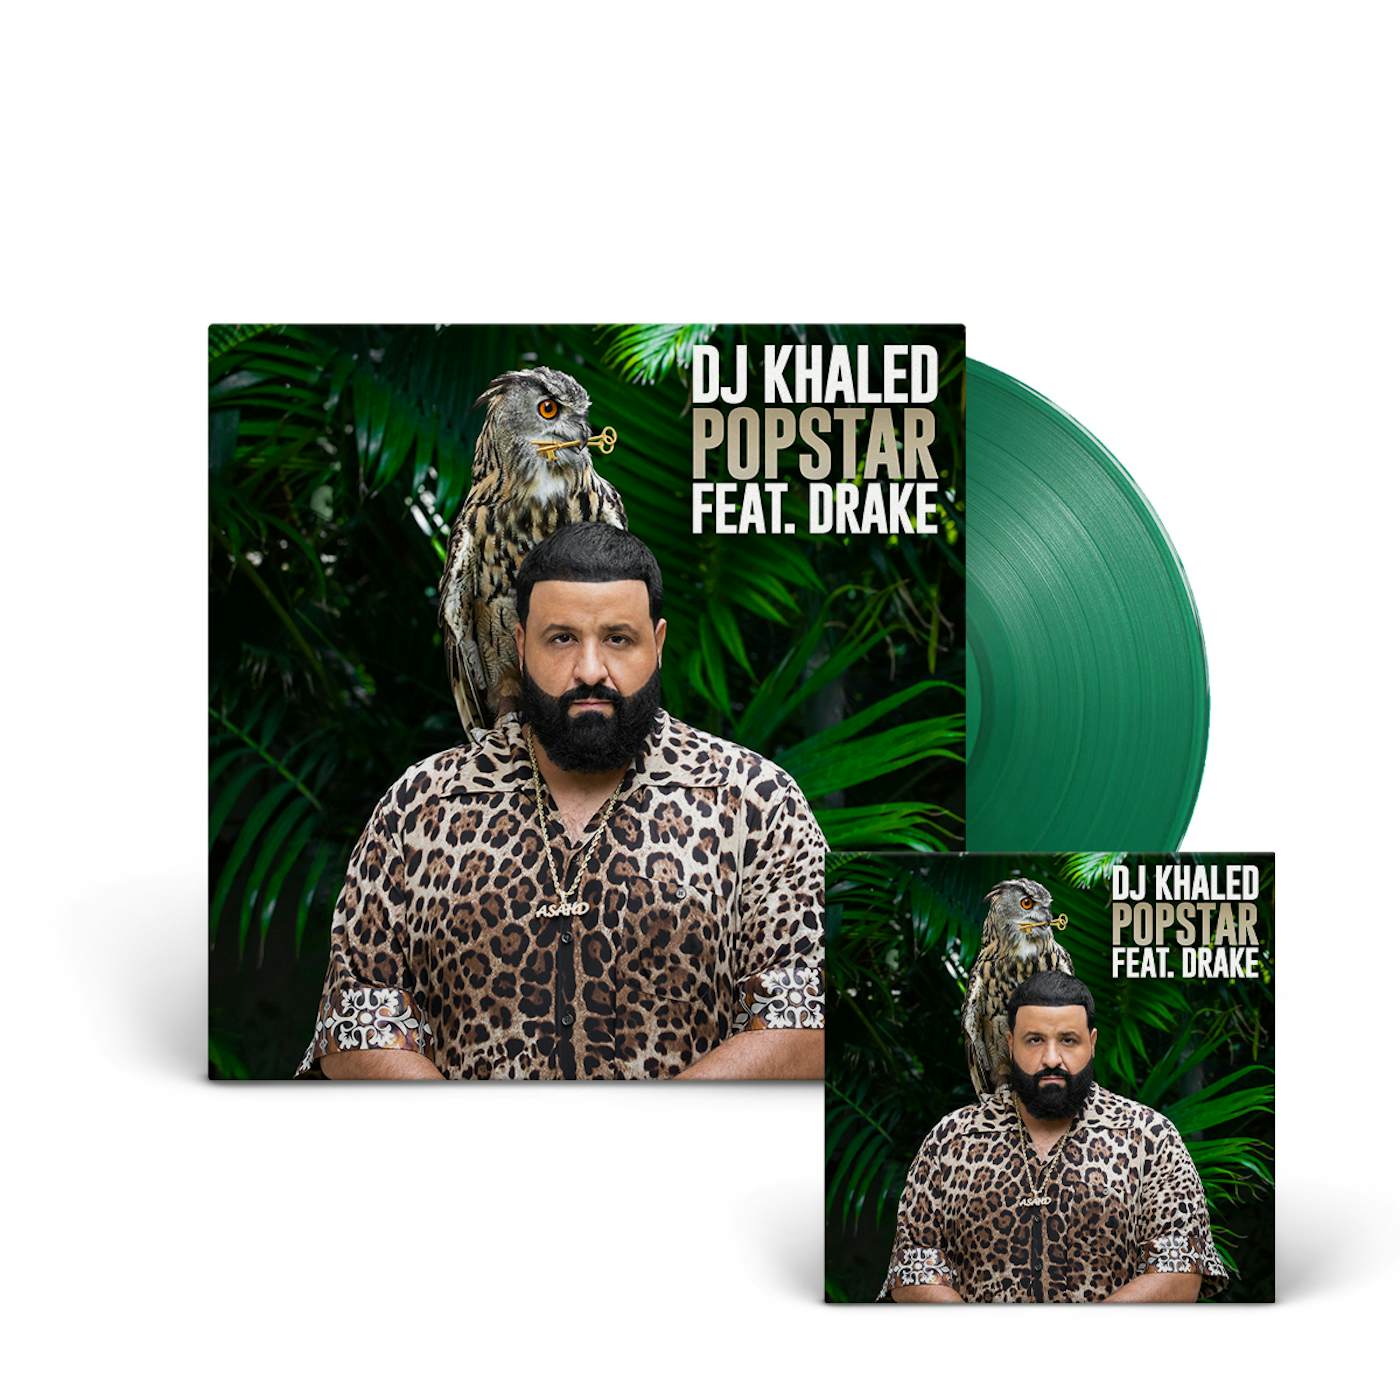 DJ Khaled “POPSTAR” 7" Green Single LP + Digital Download (Vinyl)